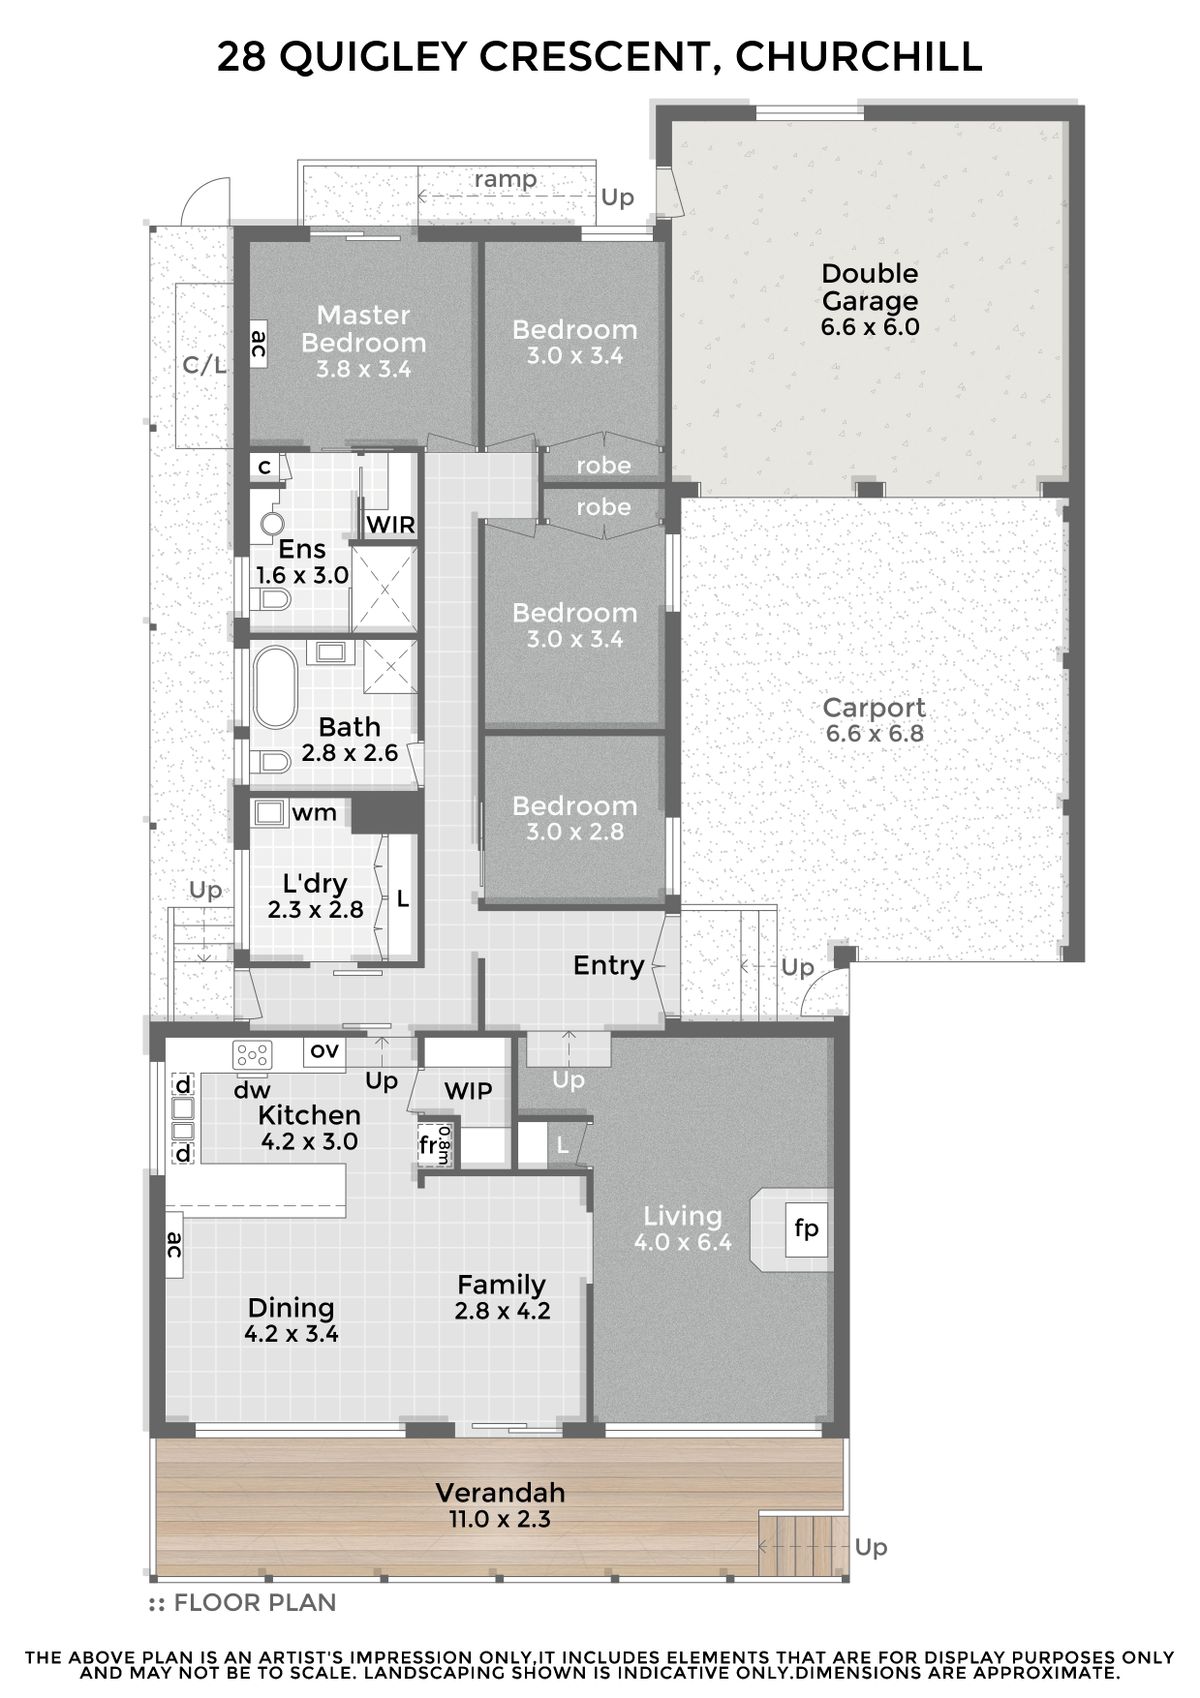 02 PRINT   28 Quigley Crescent, Churchill   floorplan